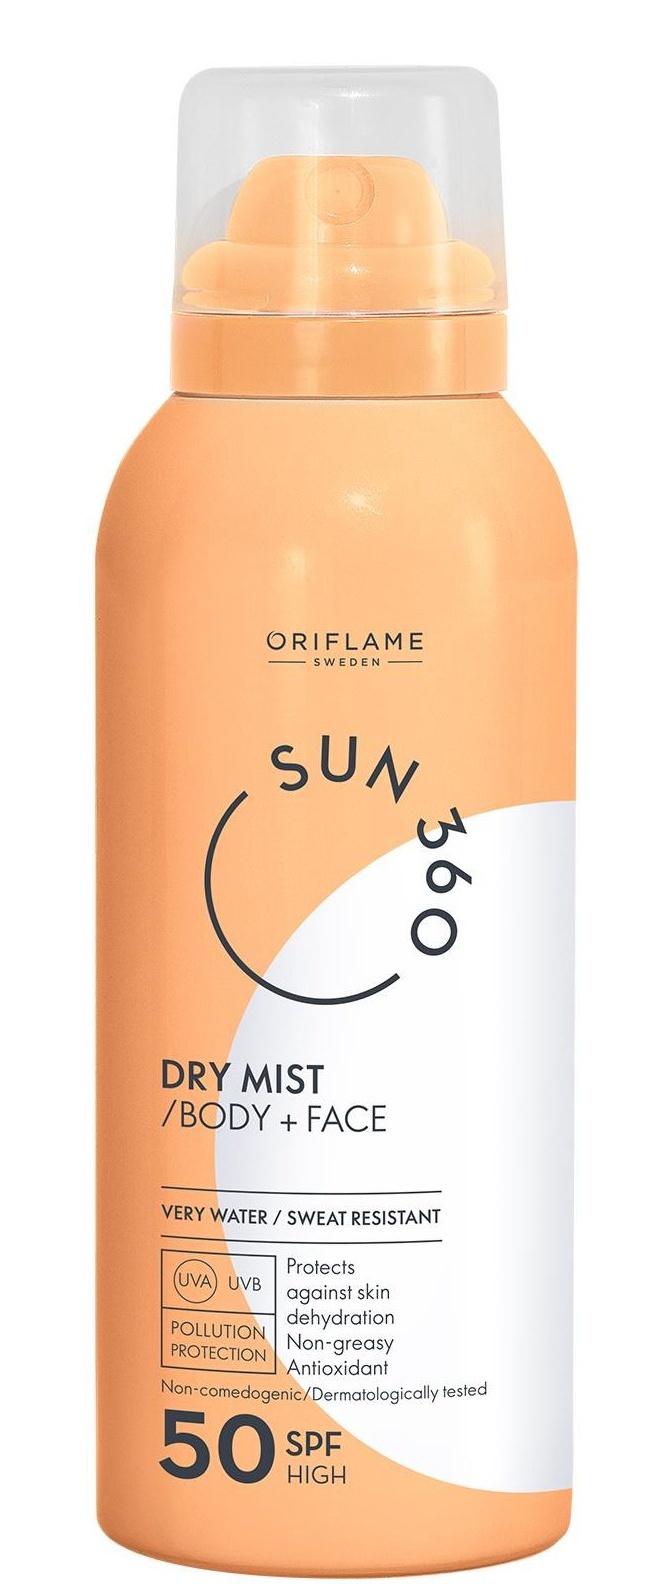 Oriflame Sun 360 Dry Mist Body + Face SPF 50